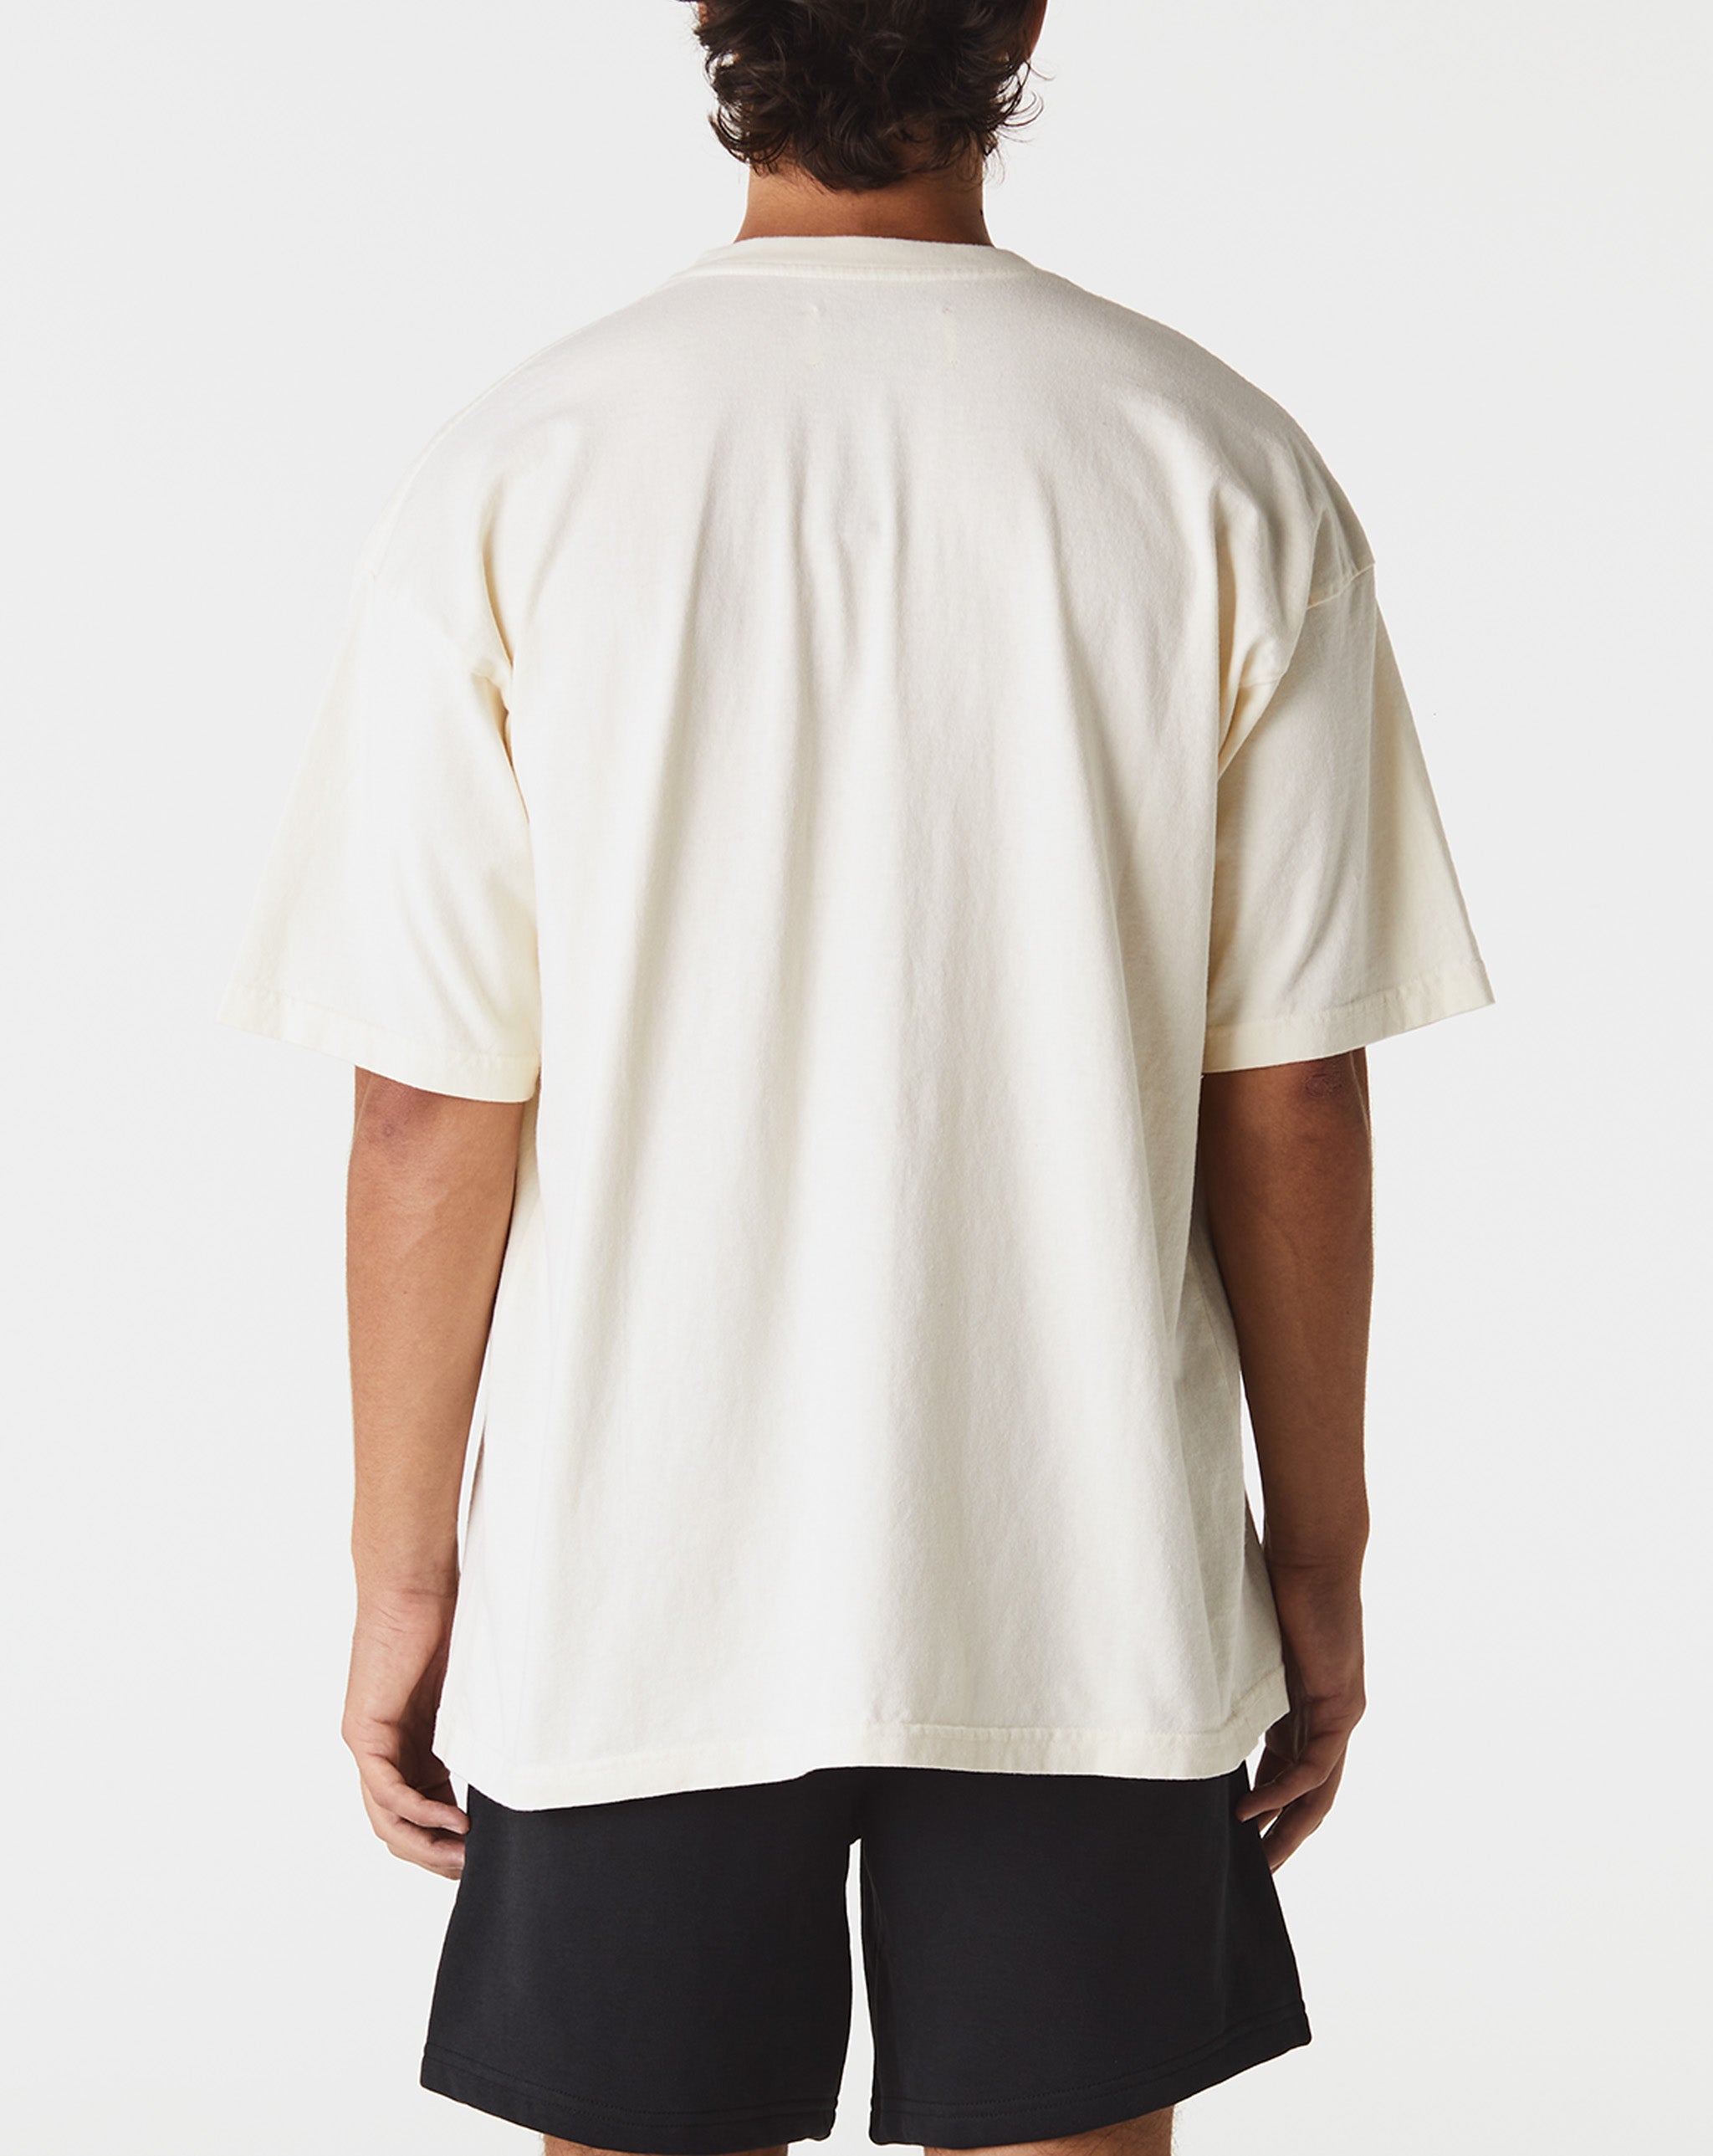 Satoshi Nakamoto Studded Logo T-Shirt  - Cheap Cerbe Jordan outlet